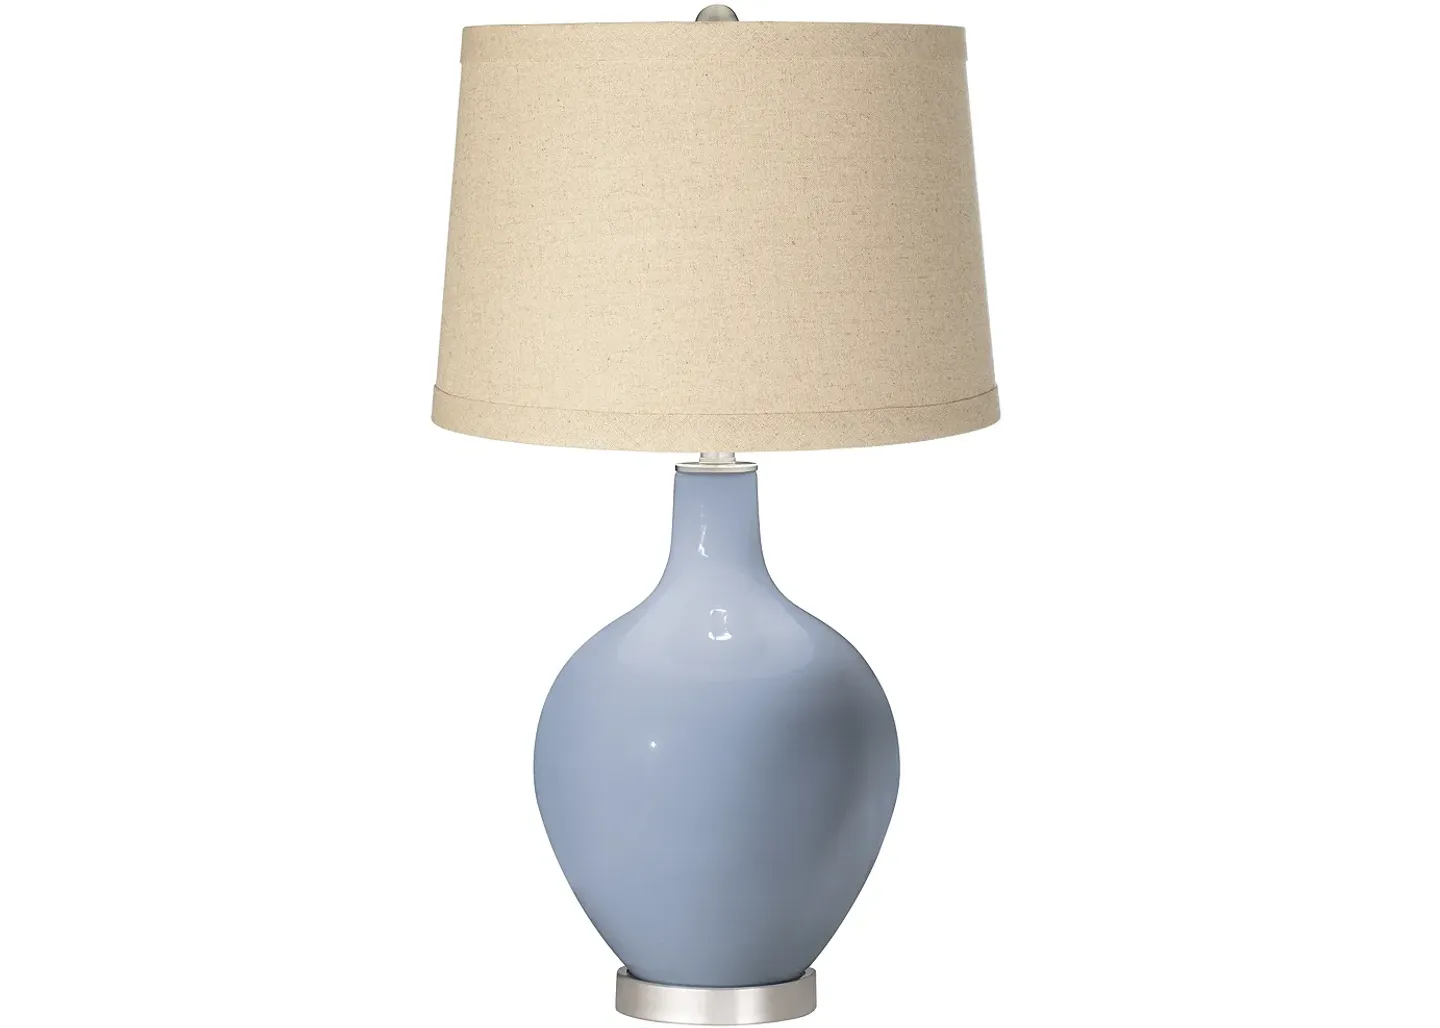 Color Plus Blue Sky Burlap Drum Shade Ovo Table Lamp